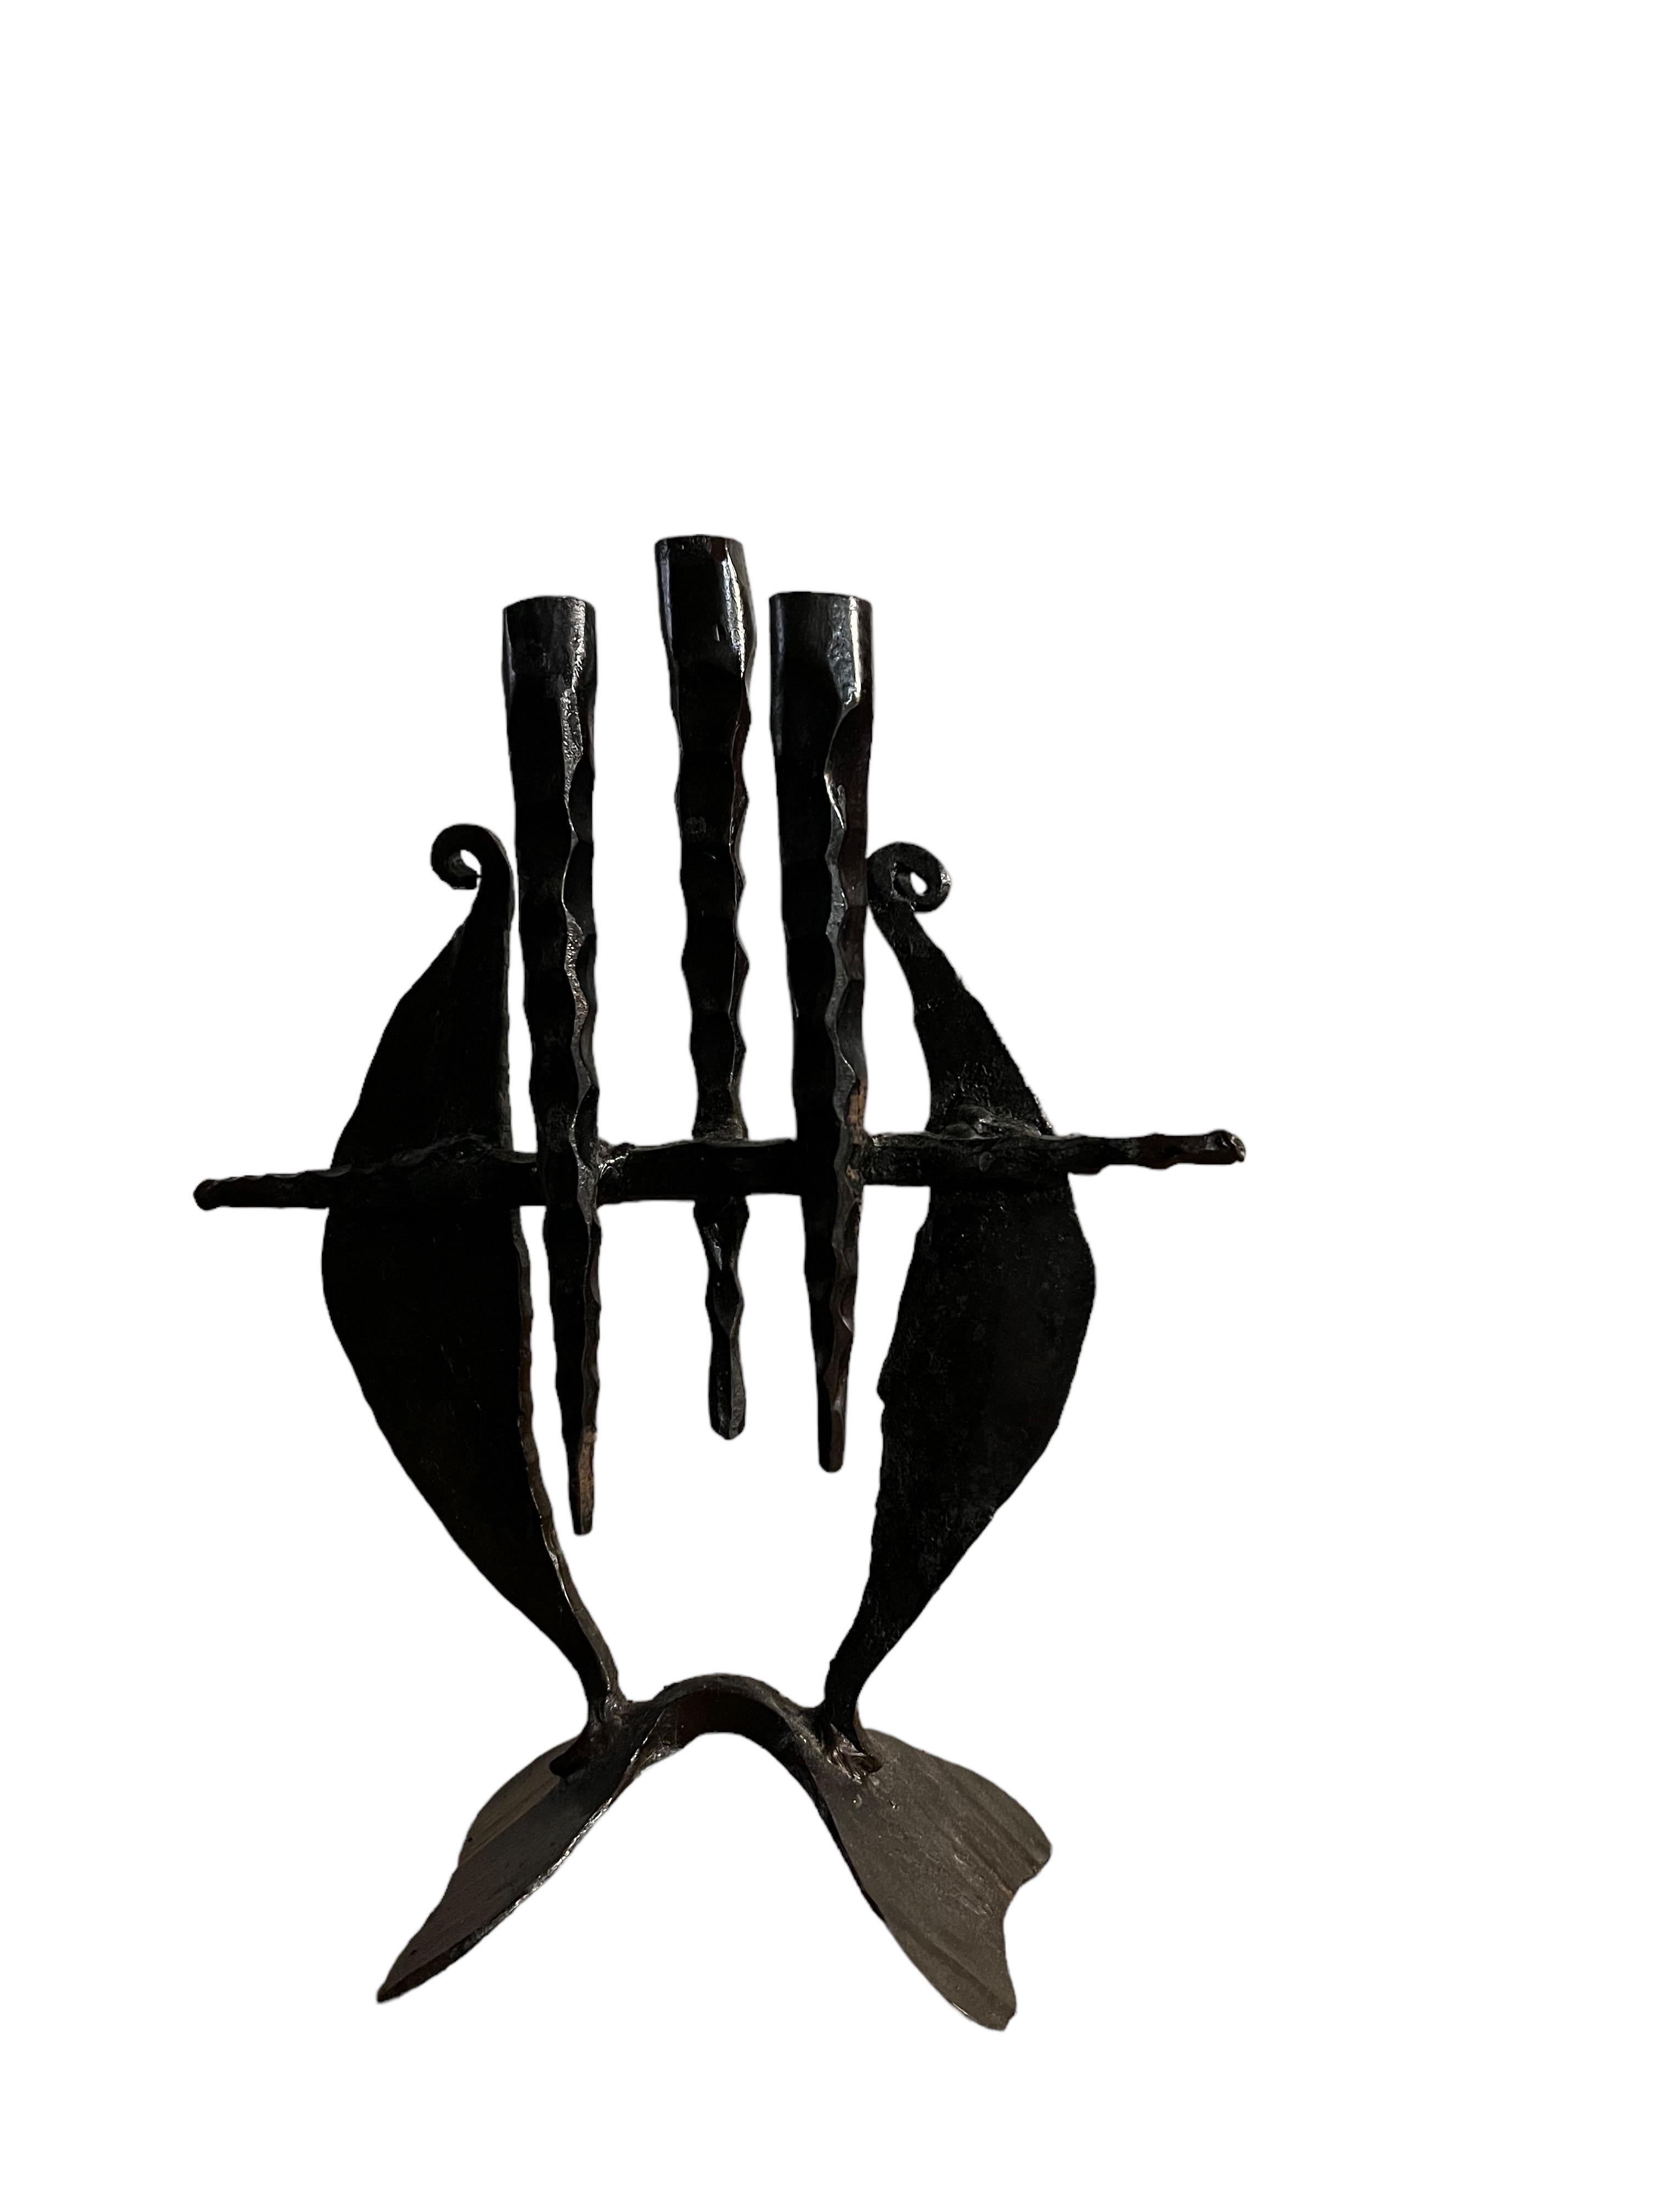 David Palombo Abstract Sculpture - Brutalist Hand Forged Iron Sculpture Candelabra Candle Stick Israeli Art Palombo